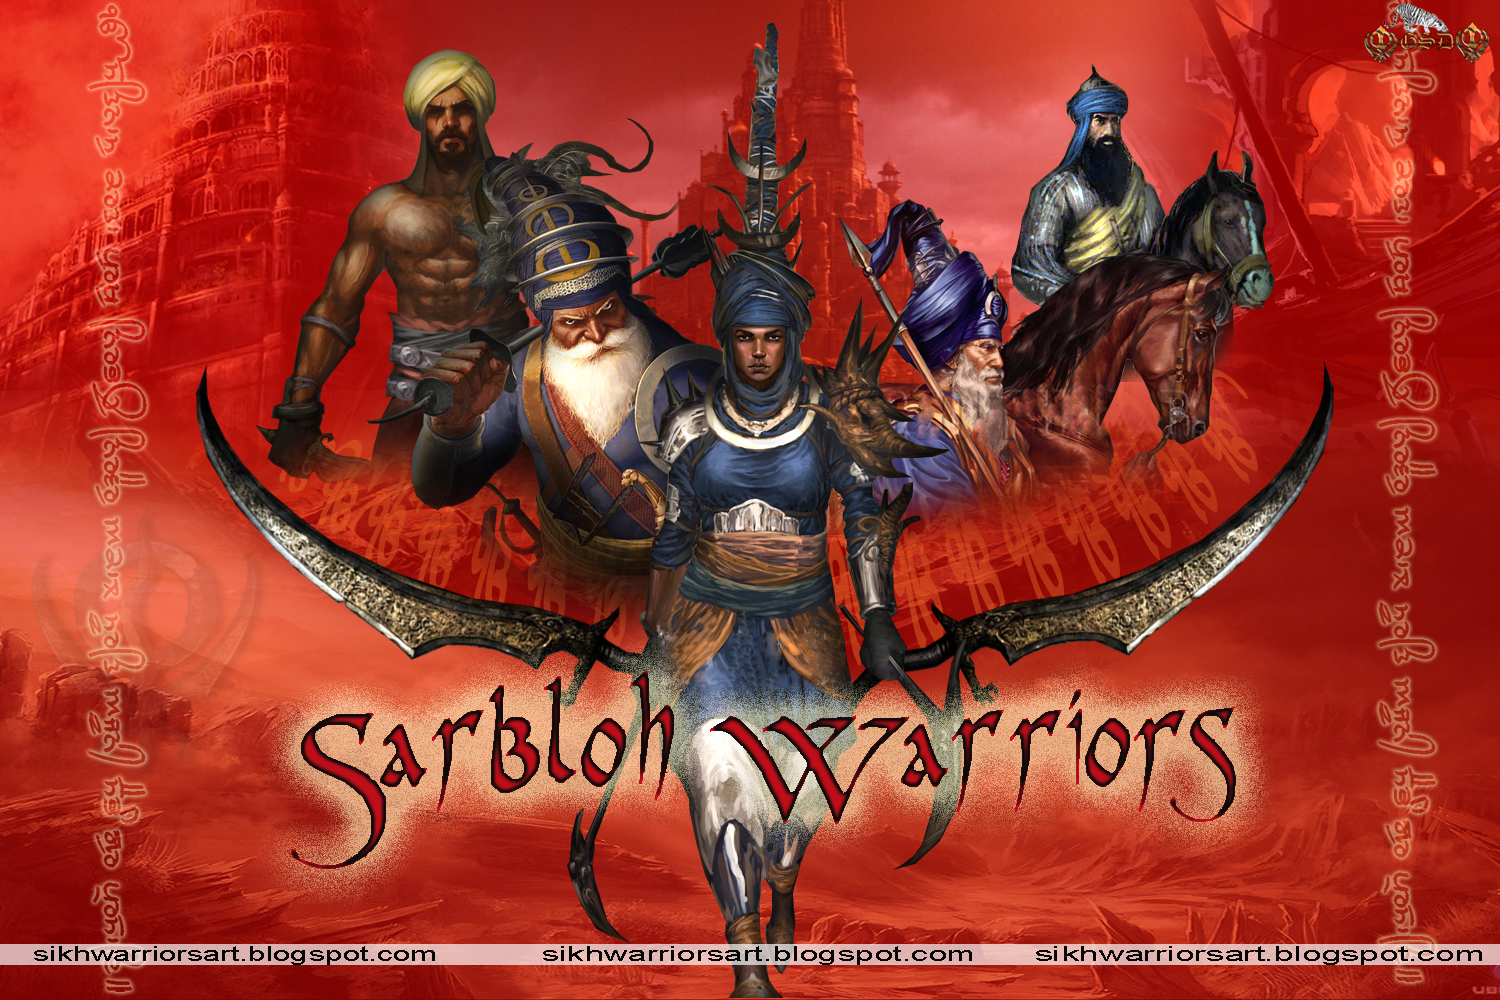 Sikh Warriors Wallpaper of Warriors